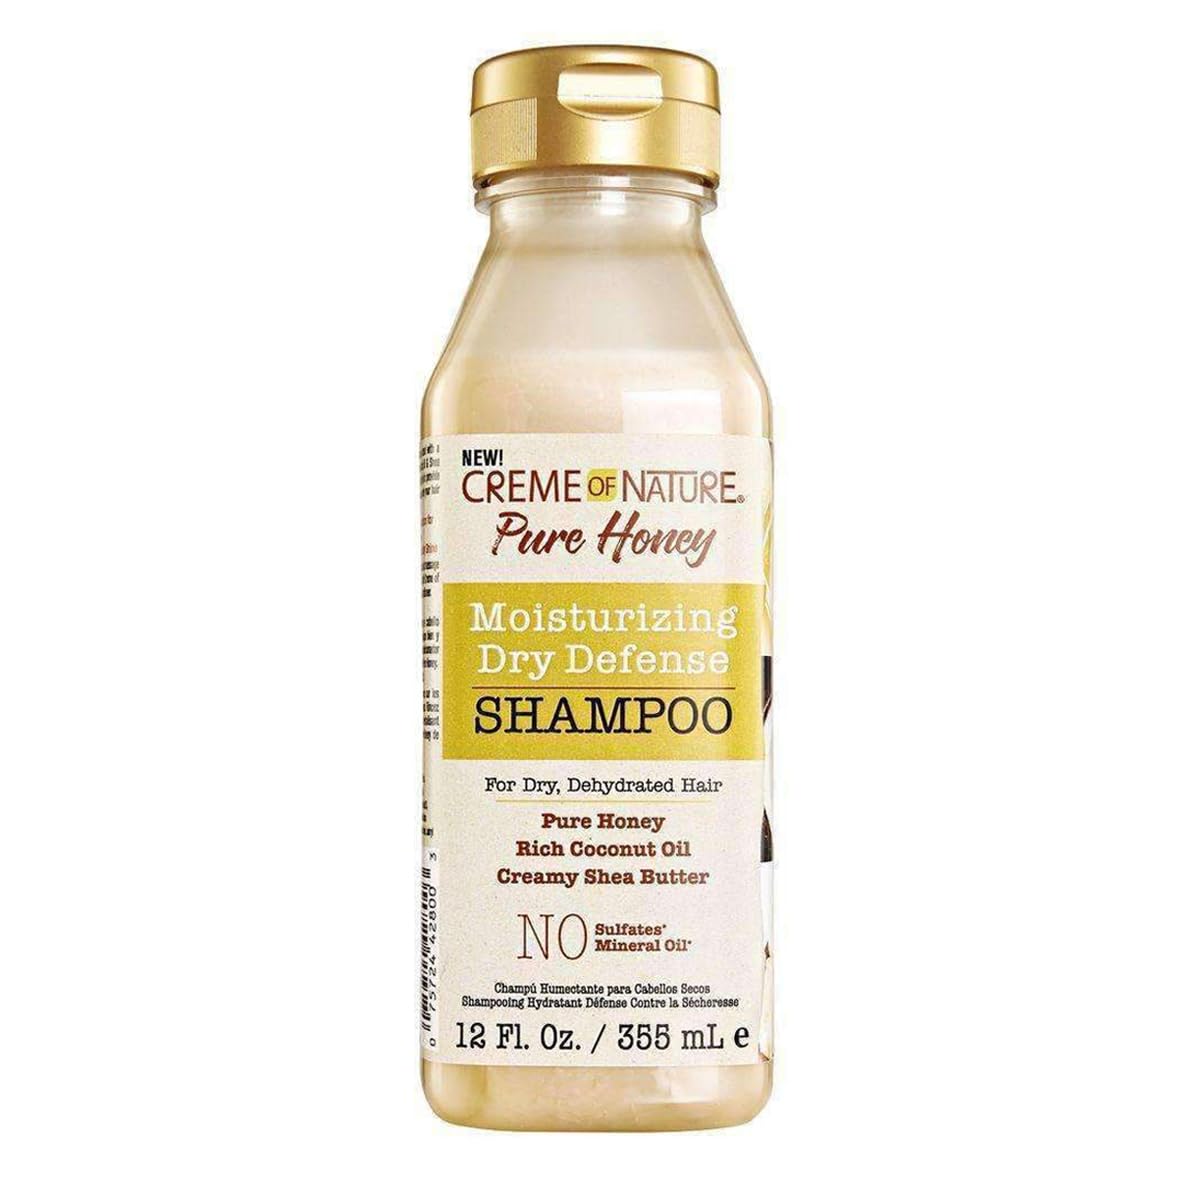 Creme of Nature Pure Honey Moisturizing Dry Defense Shampoo, 12 Oz (RR42800)